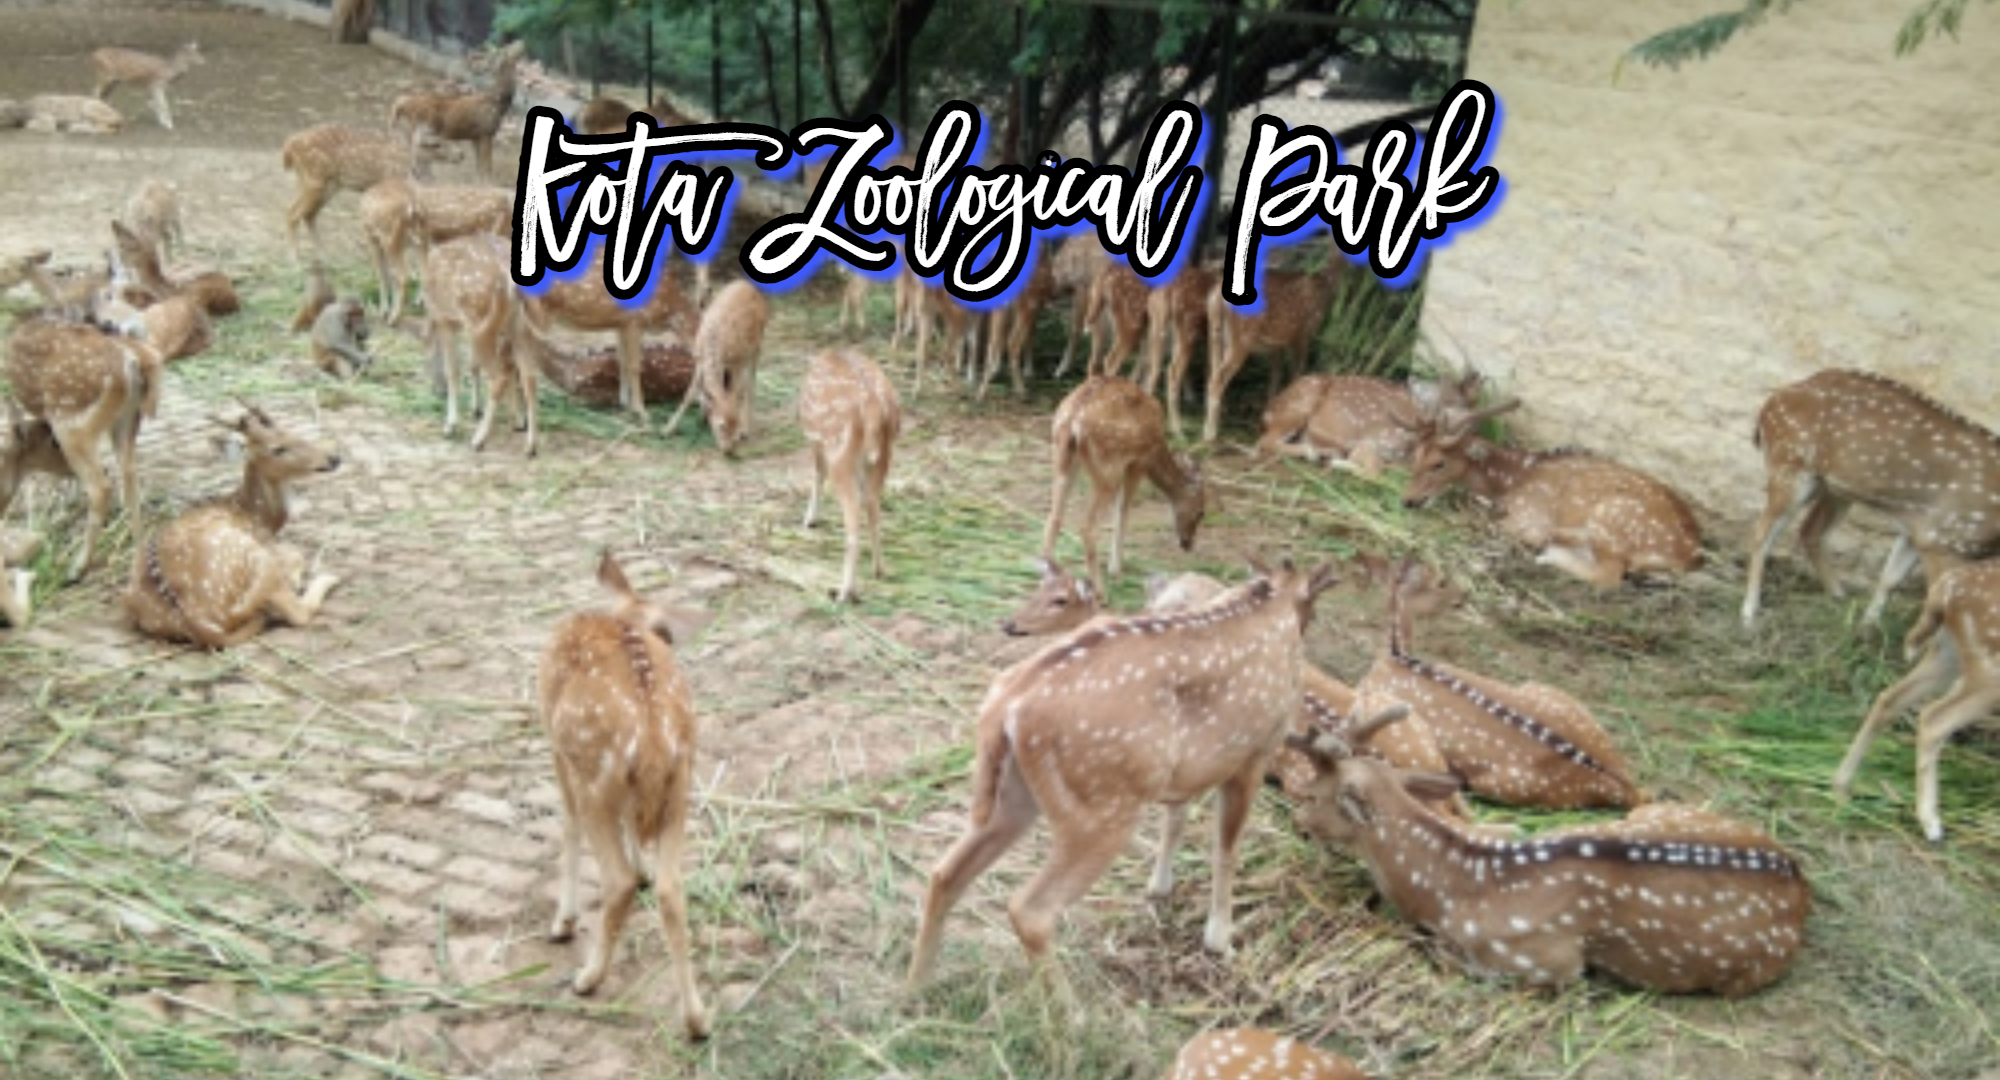 kota zoological park, jodhpur cabs